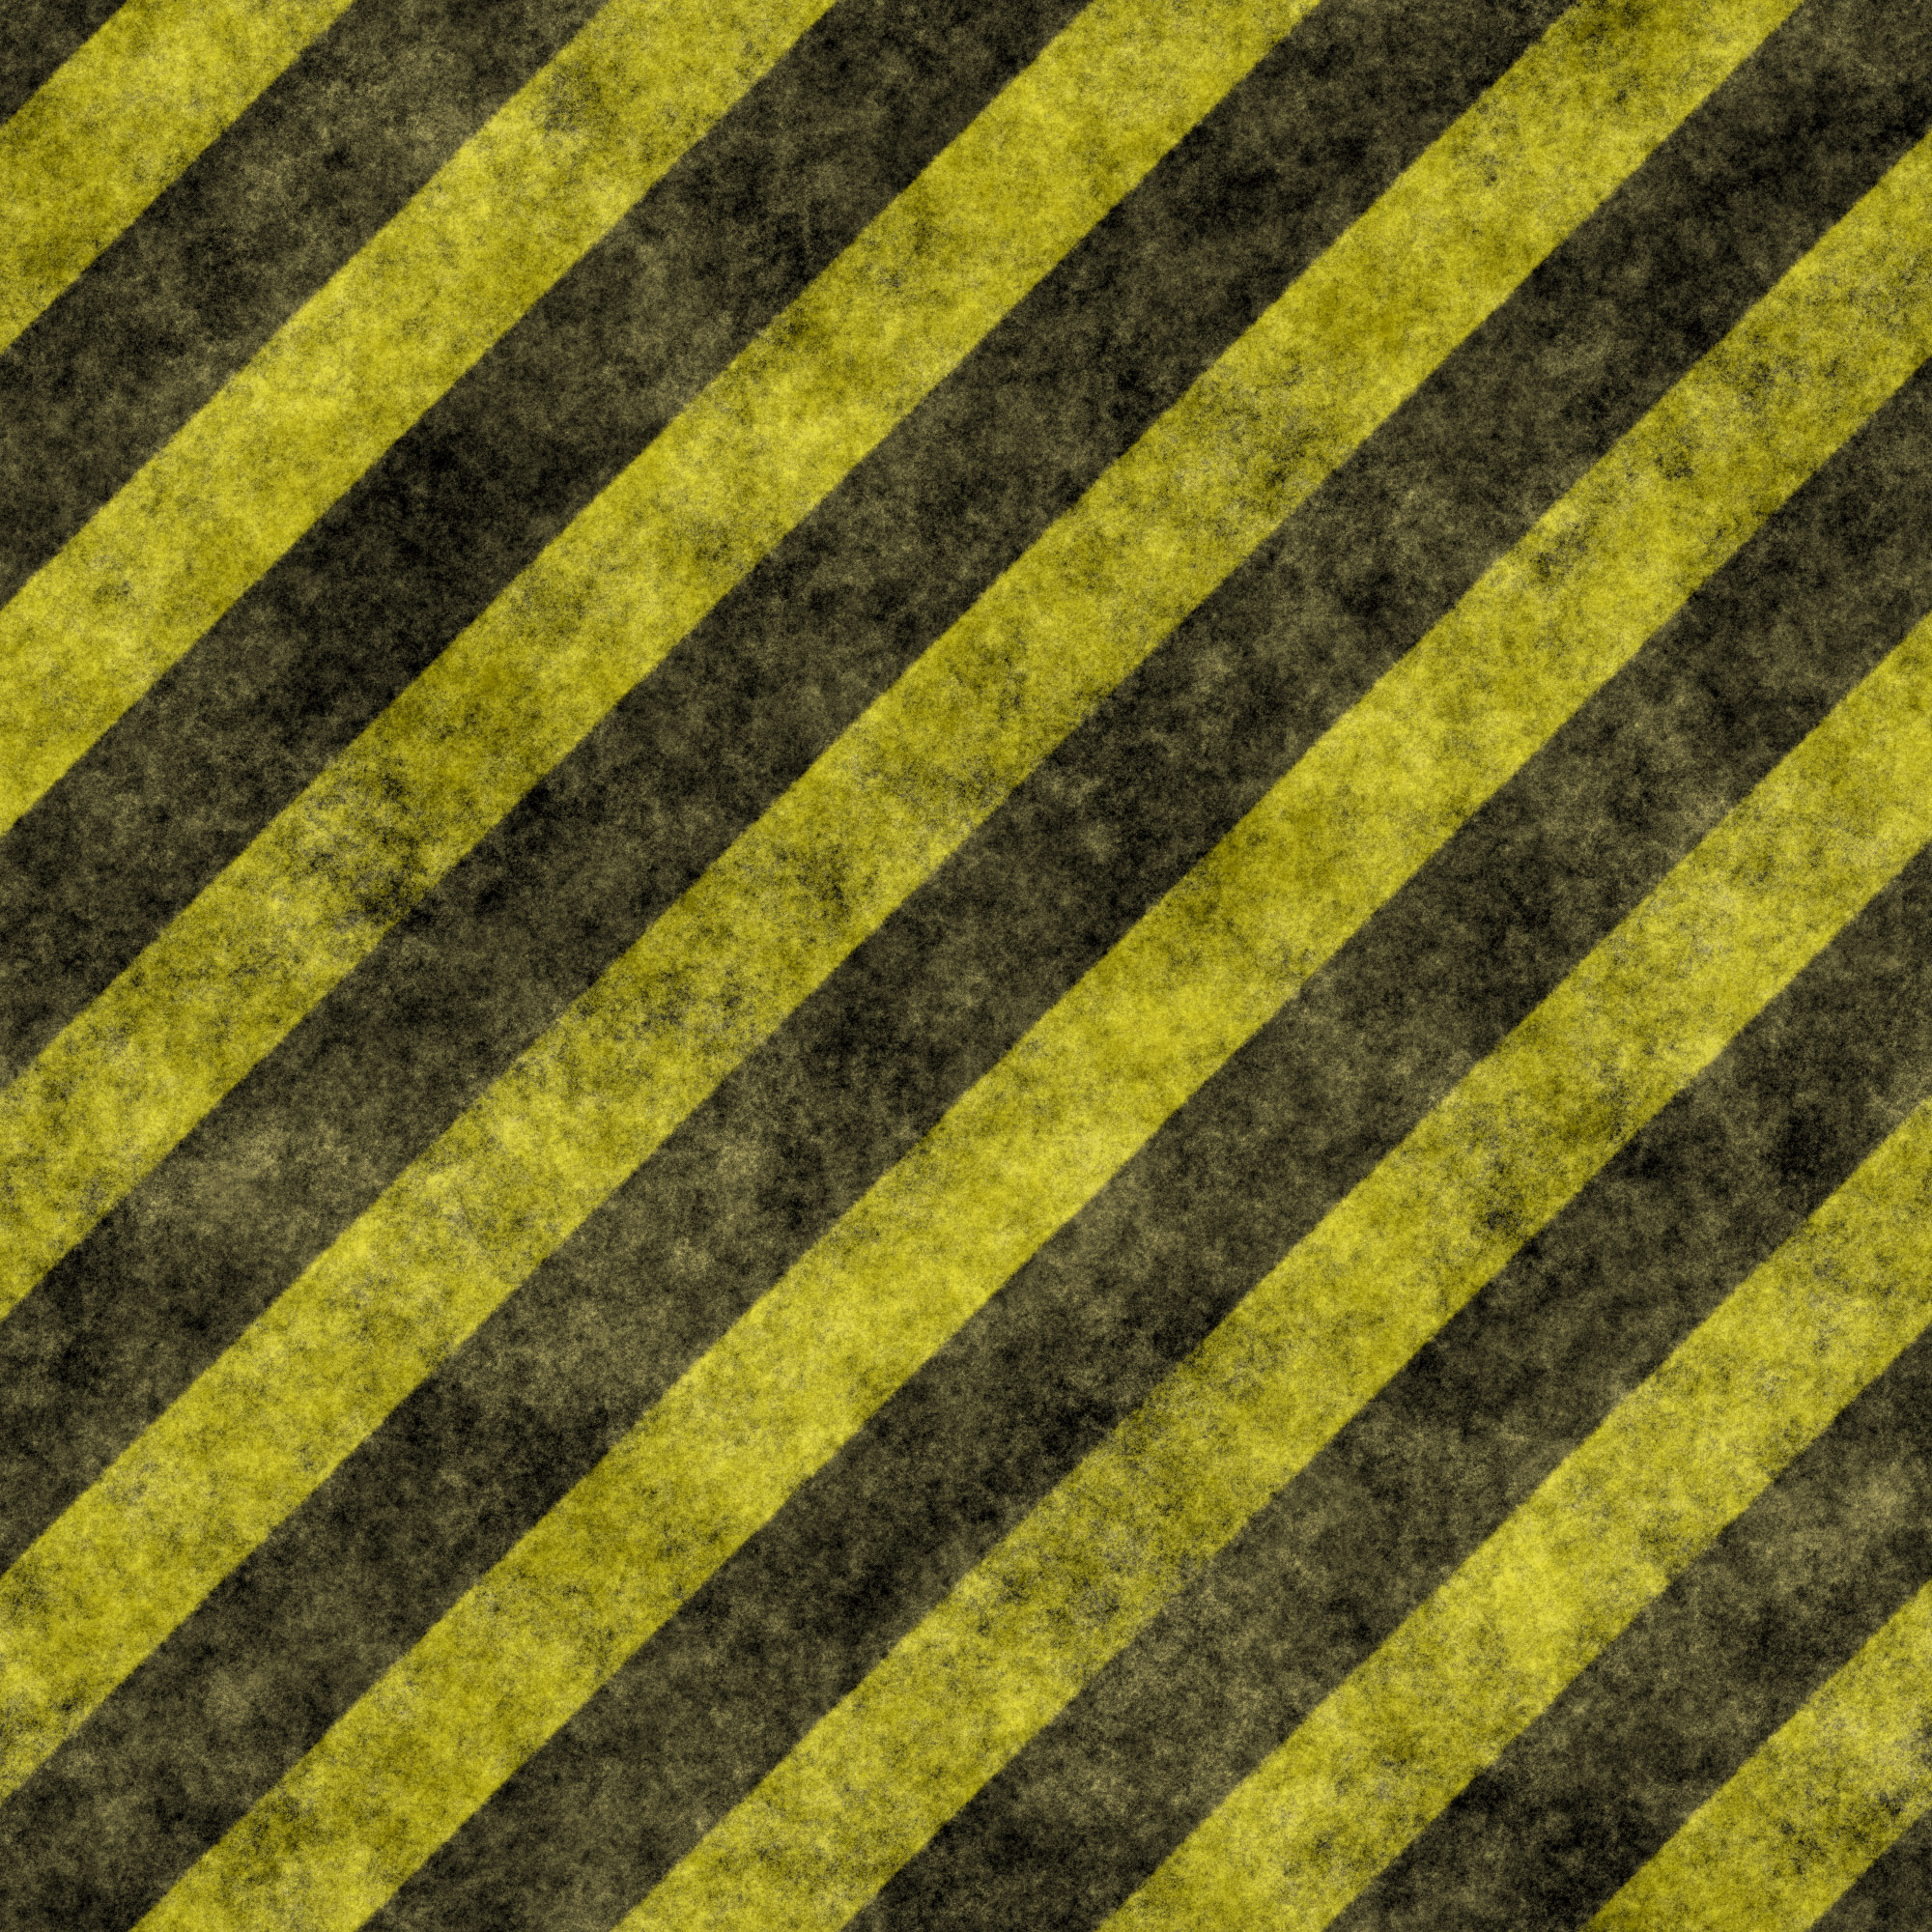 Hazard Stripes Wallpaper Or Background Image Mytextures